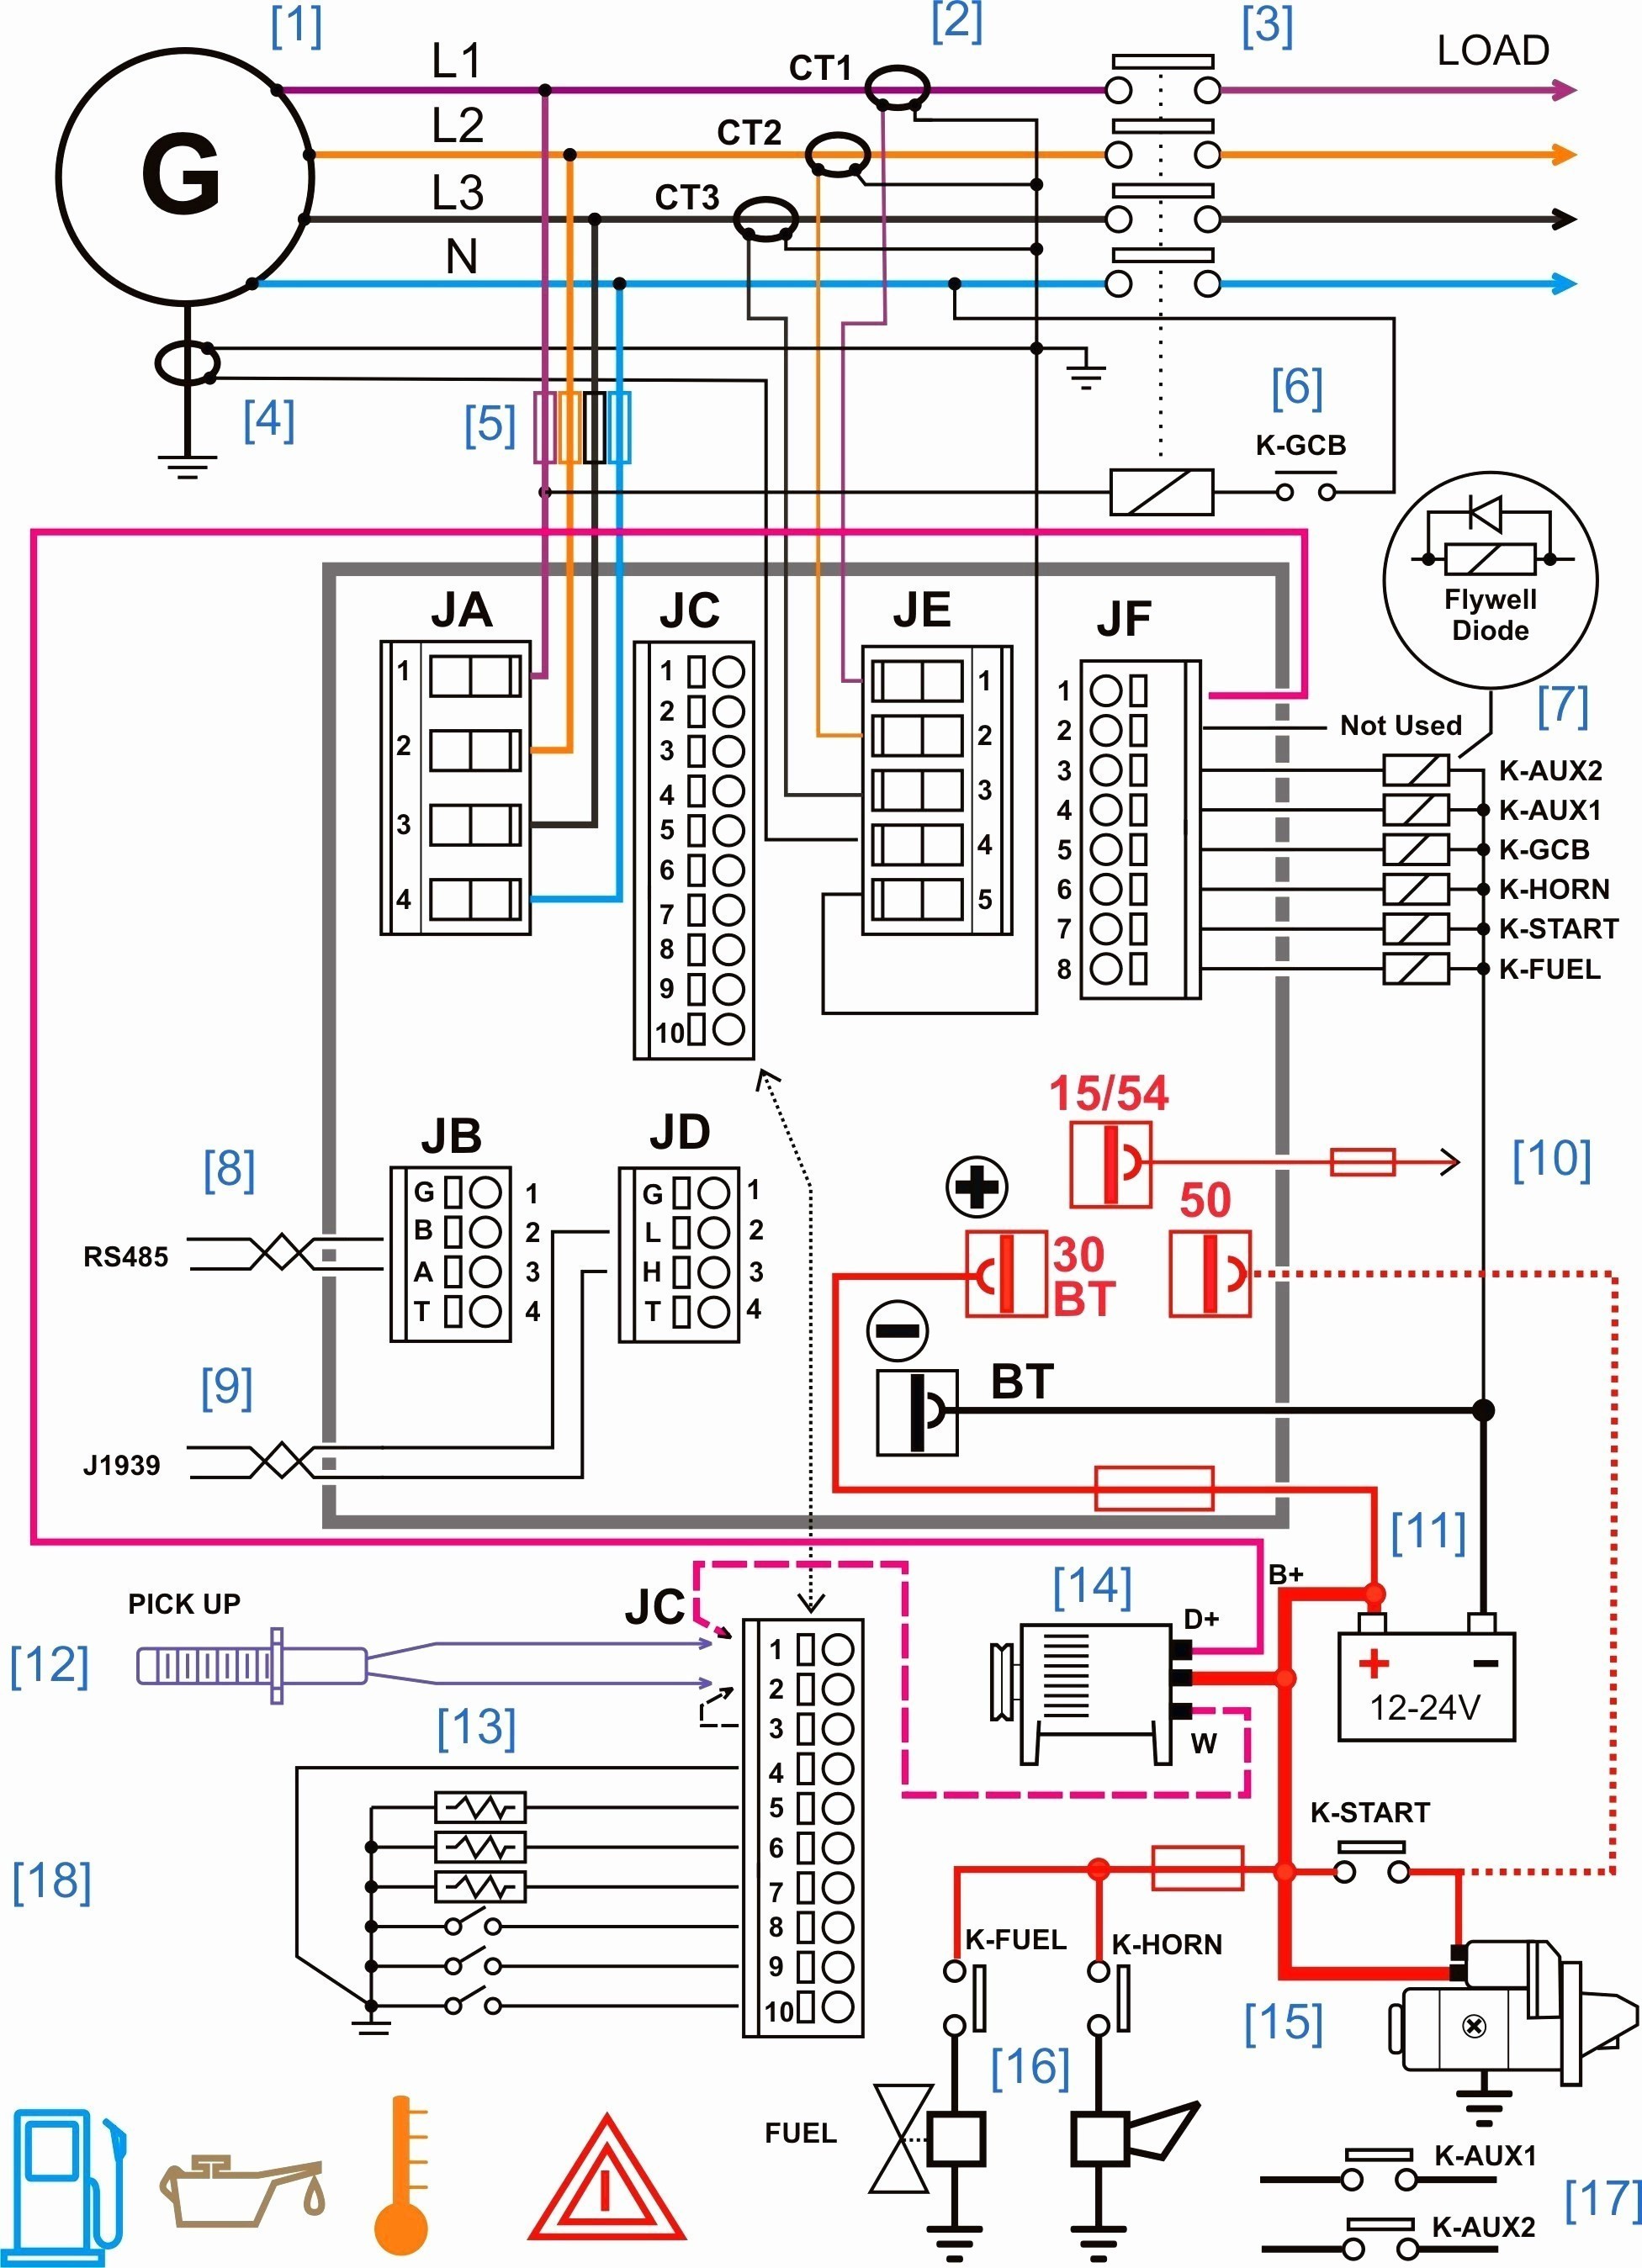 Car sound System Diagram Save Audi A4 Cd Player Wiring Diagram Of Car sound System Diagram